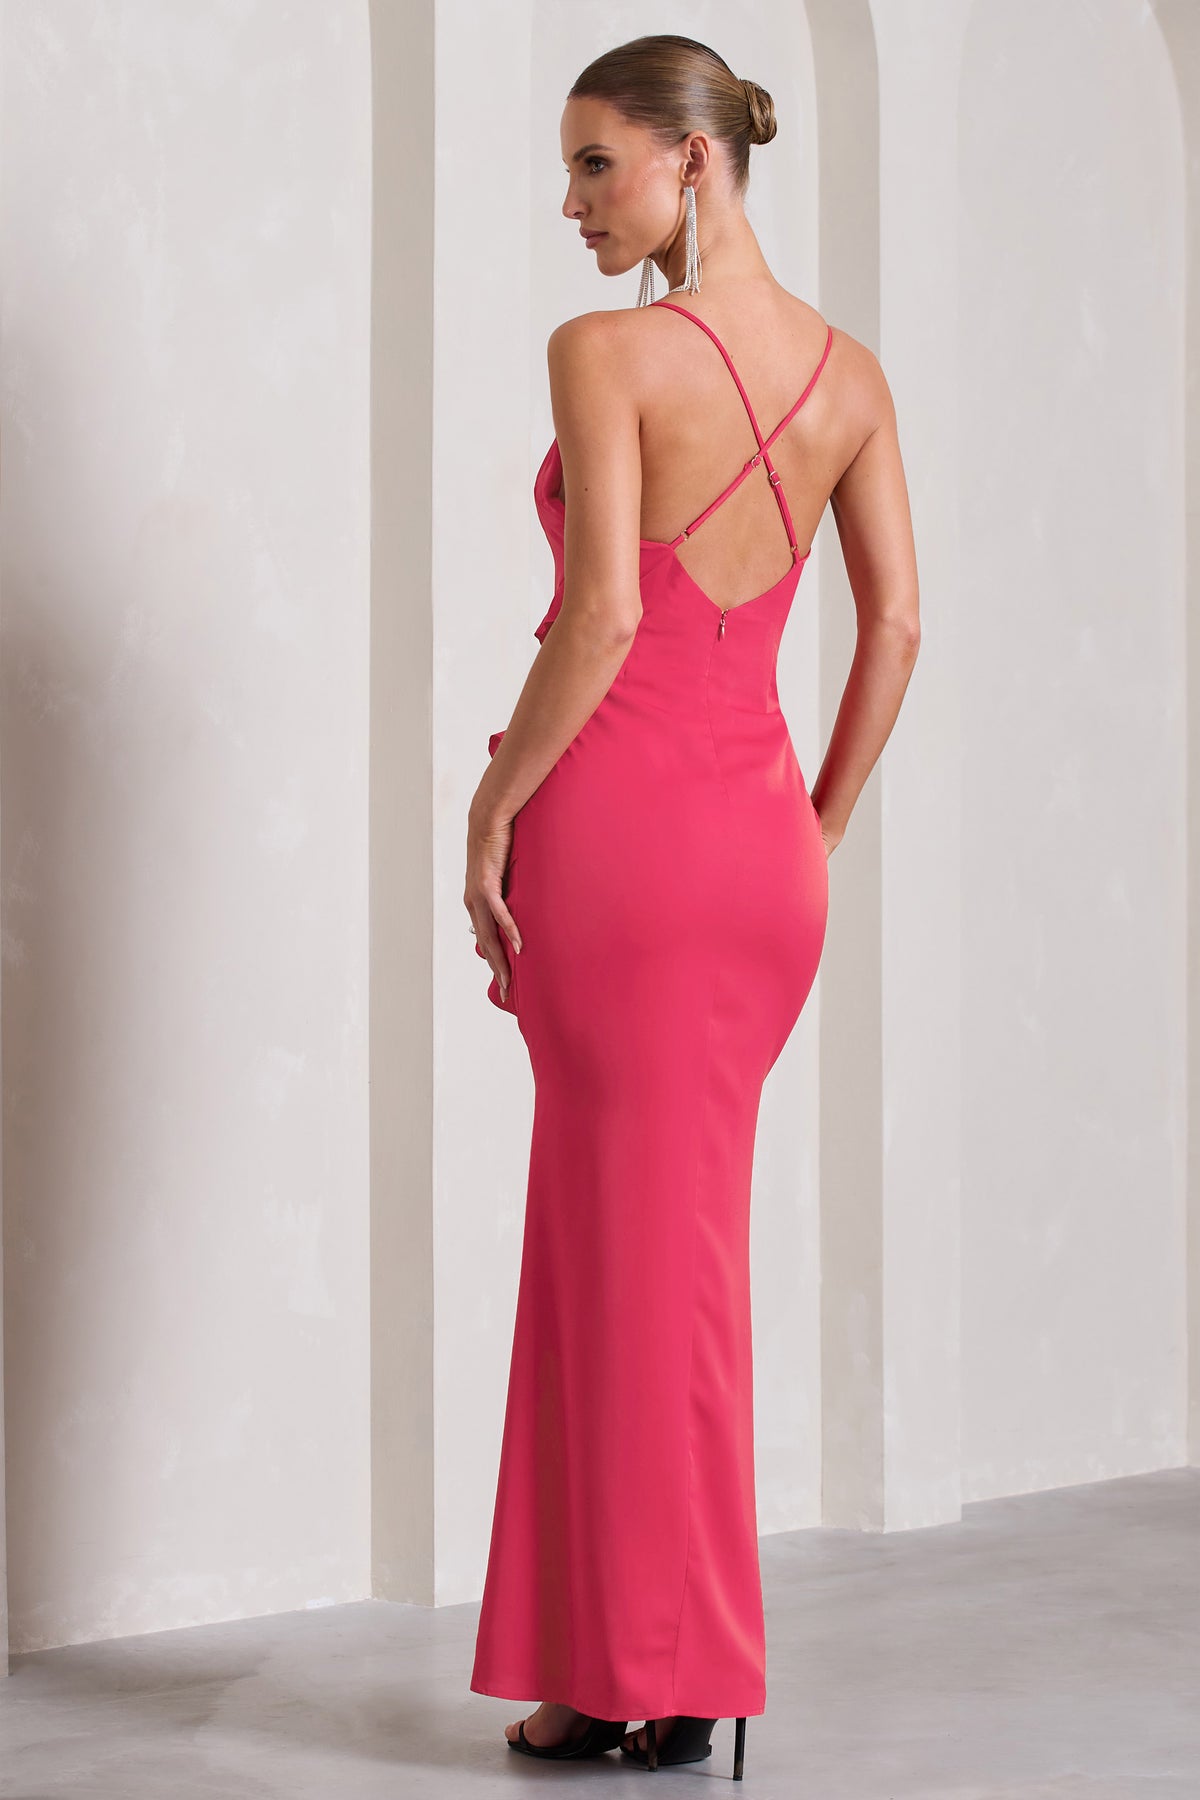 Haute Monde Woman's Size L Built In Bra Pullover Pink Back Zip Dress!